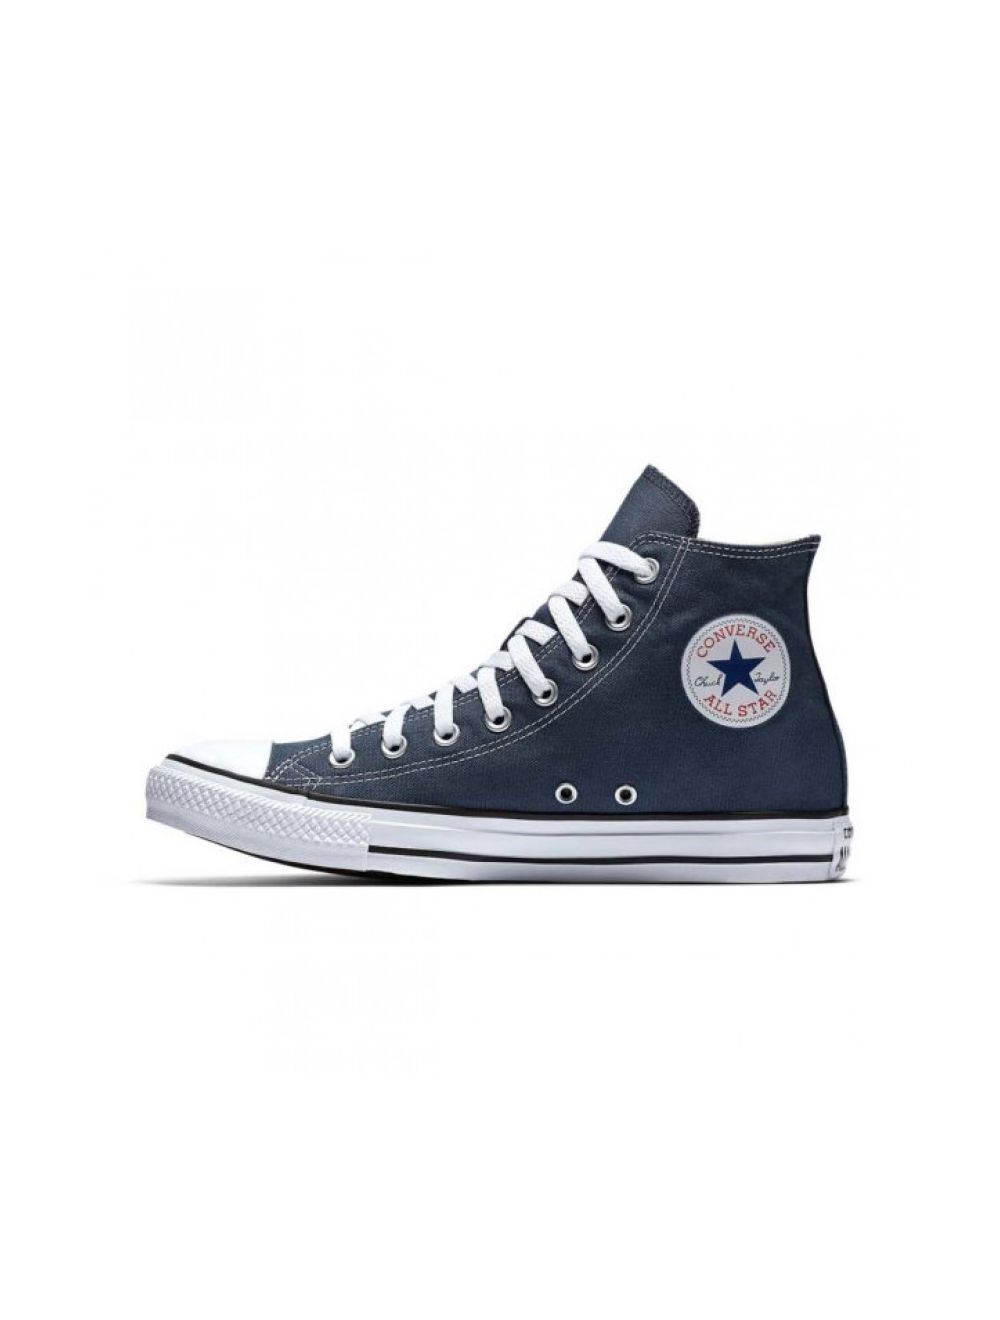 all star converse navy blue